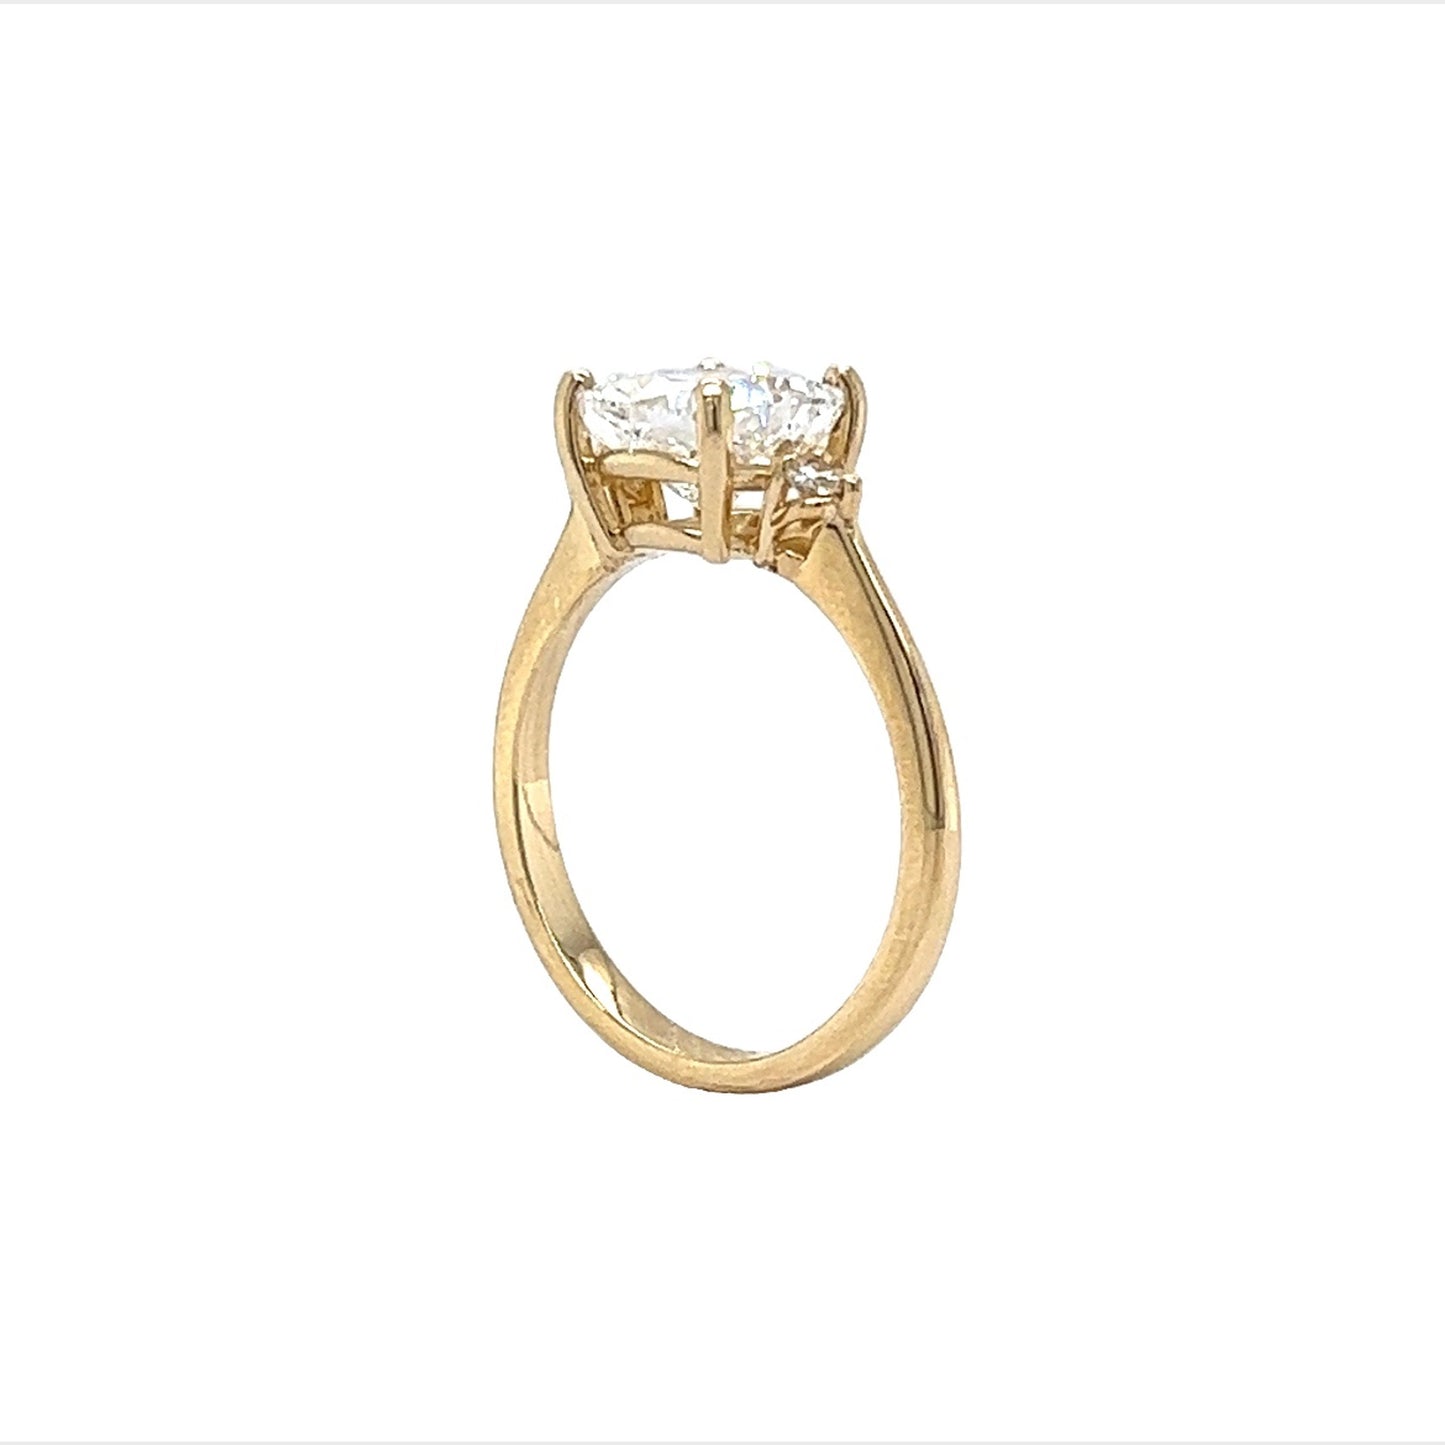 2.19 Cushion Cut Diamond Engagement Ring in 14k Yellow Gold